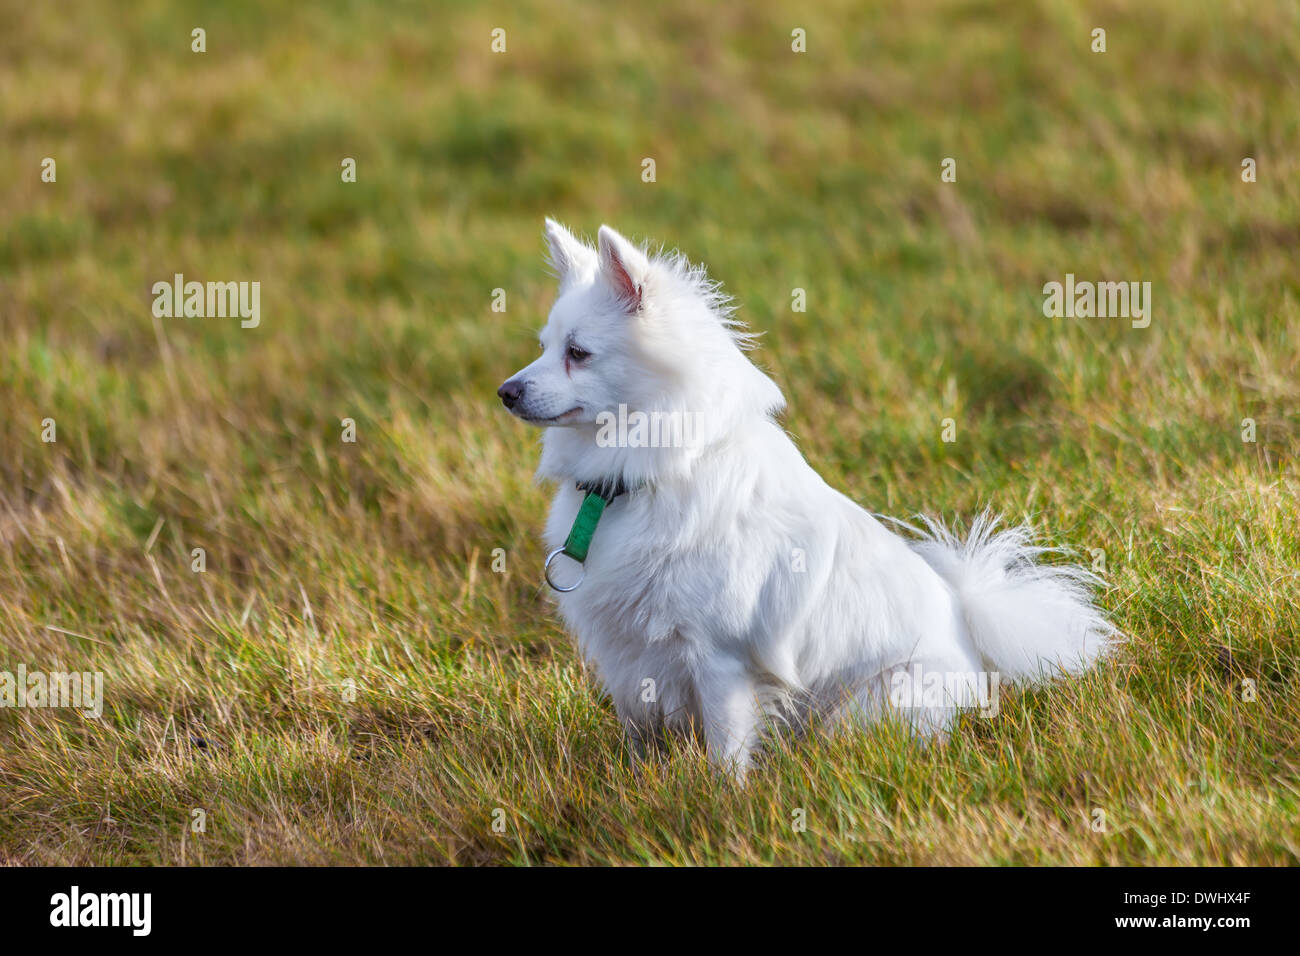 White Pomeranian dog sitting on grass field Stock Photo